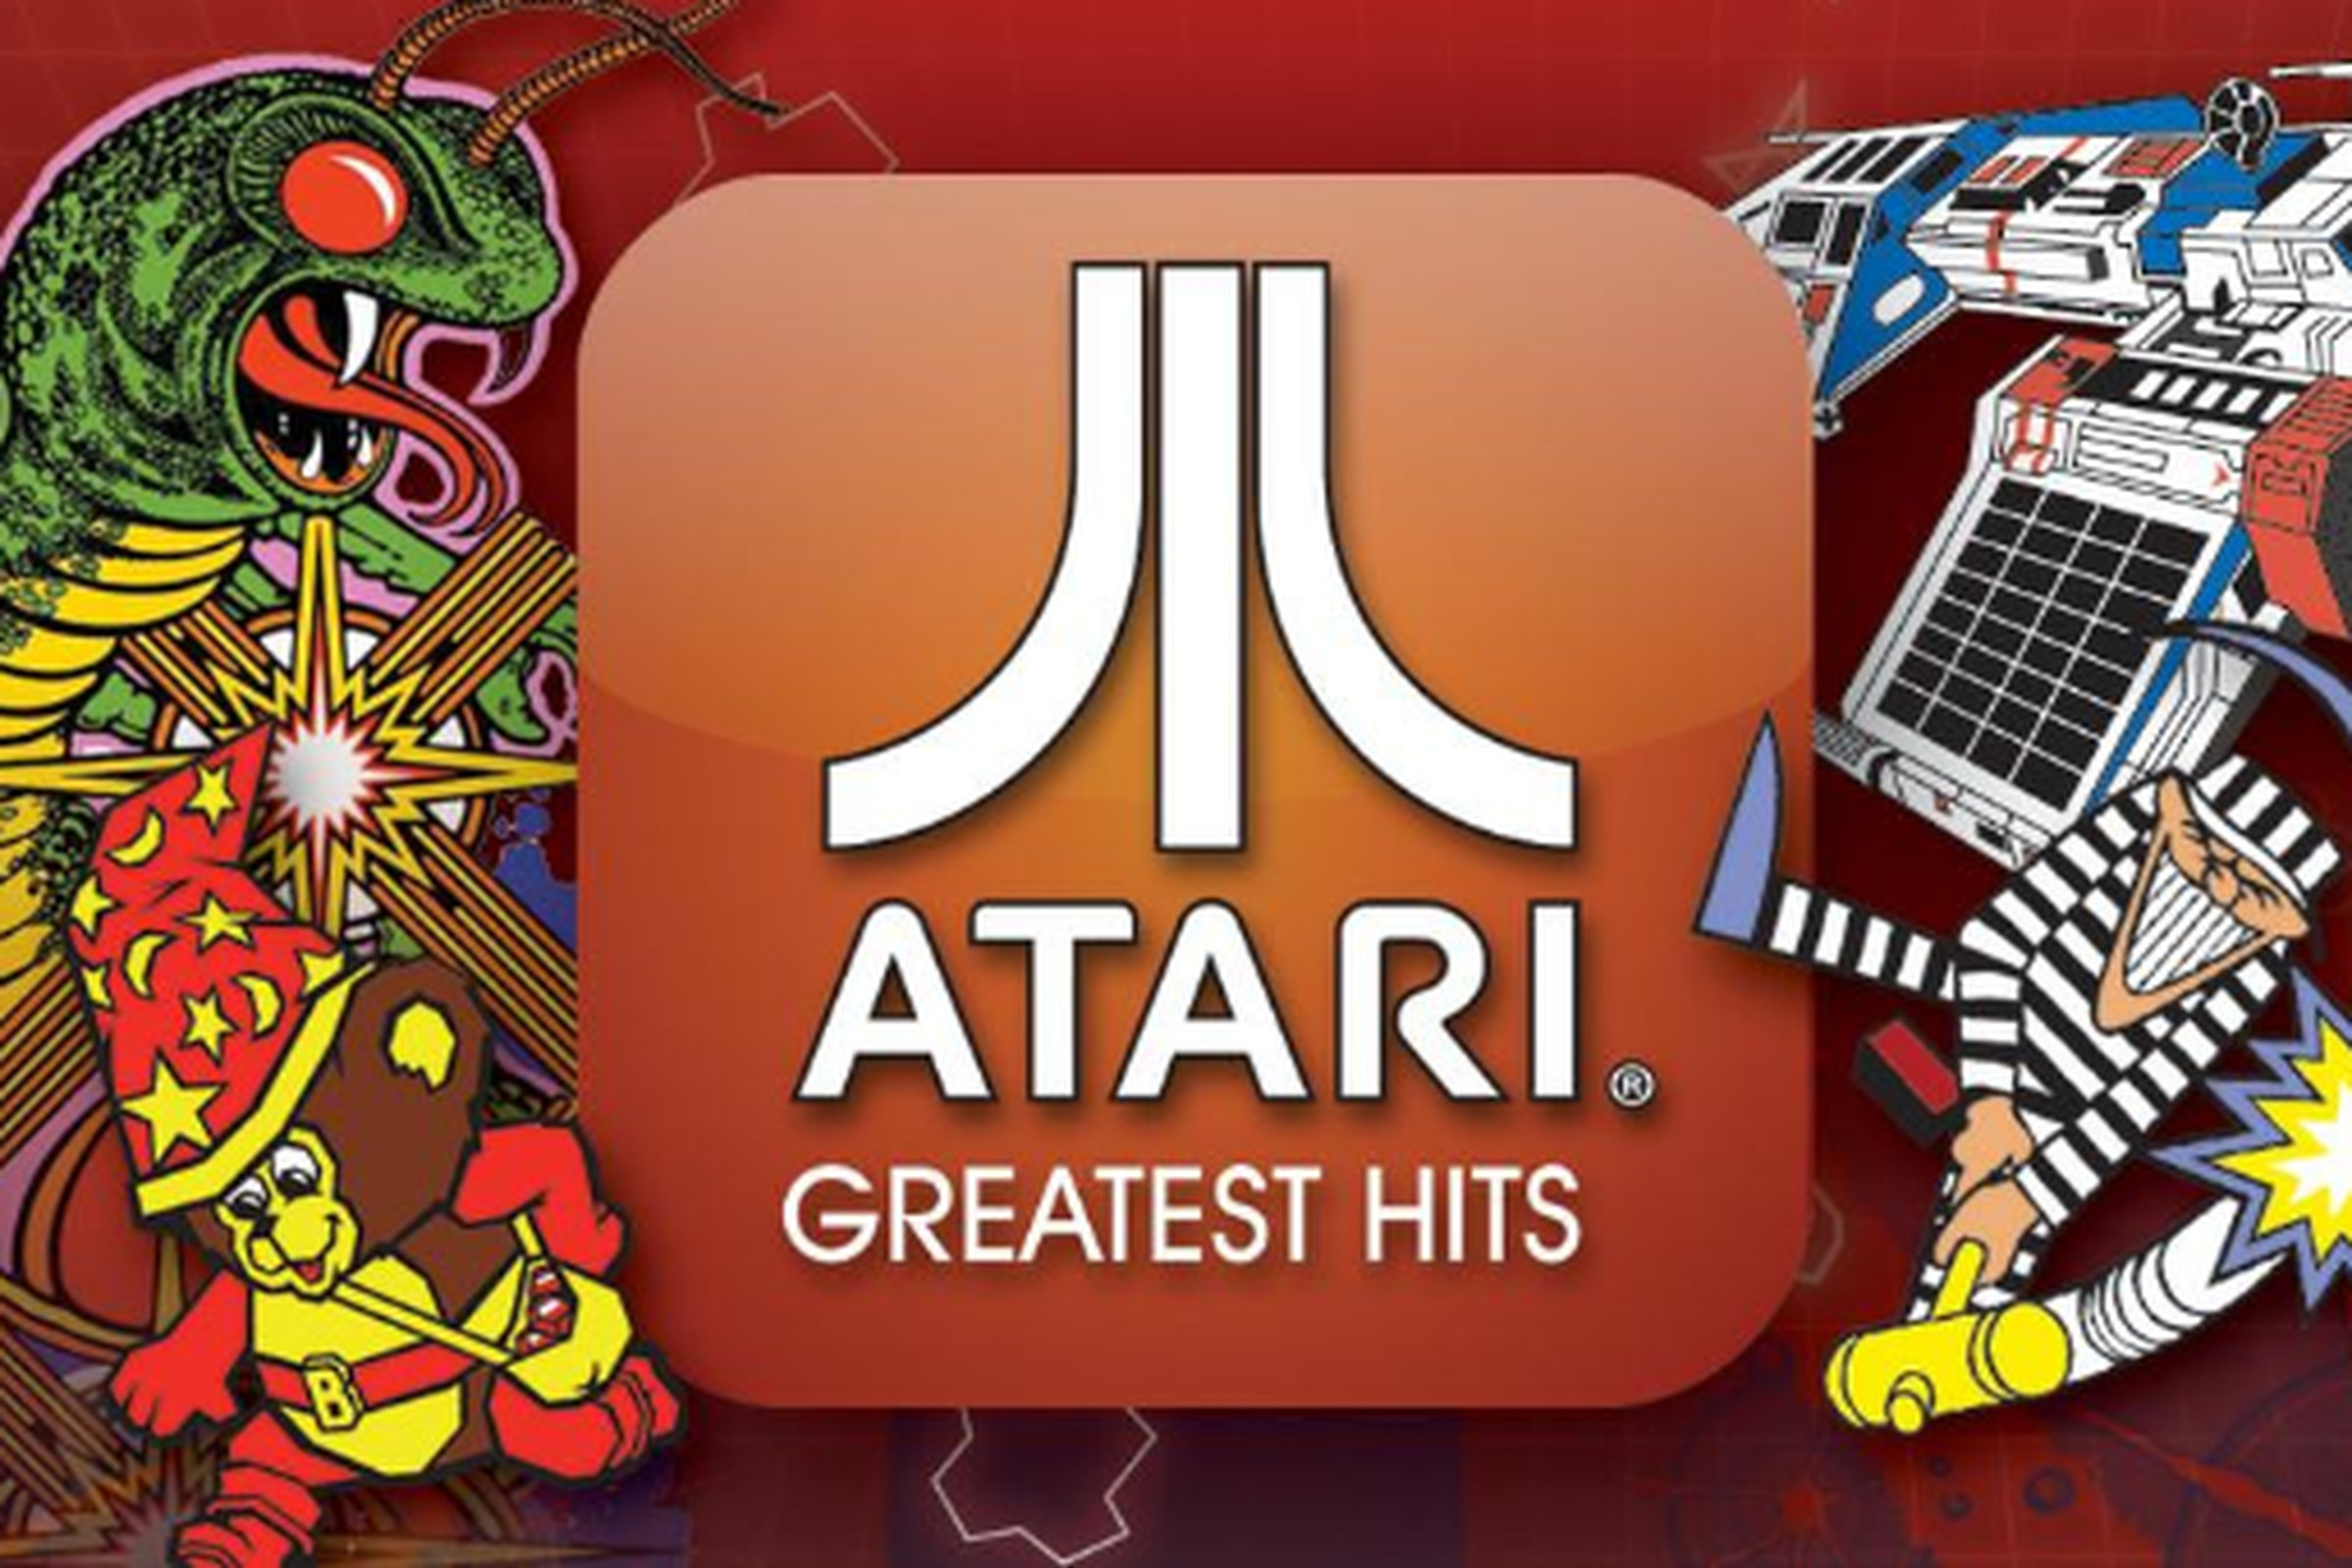 Atari Greatest Hits Android